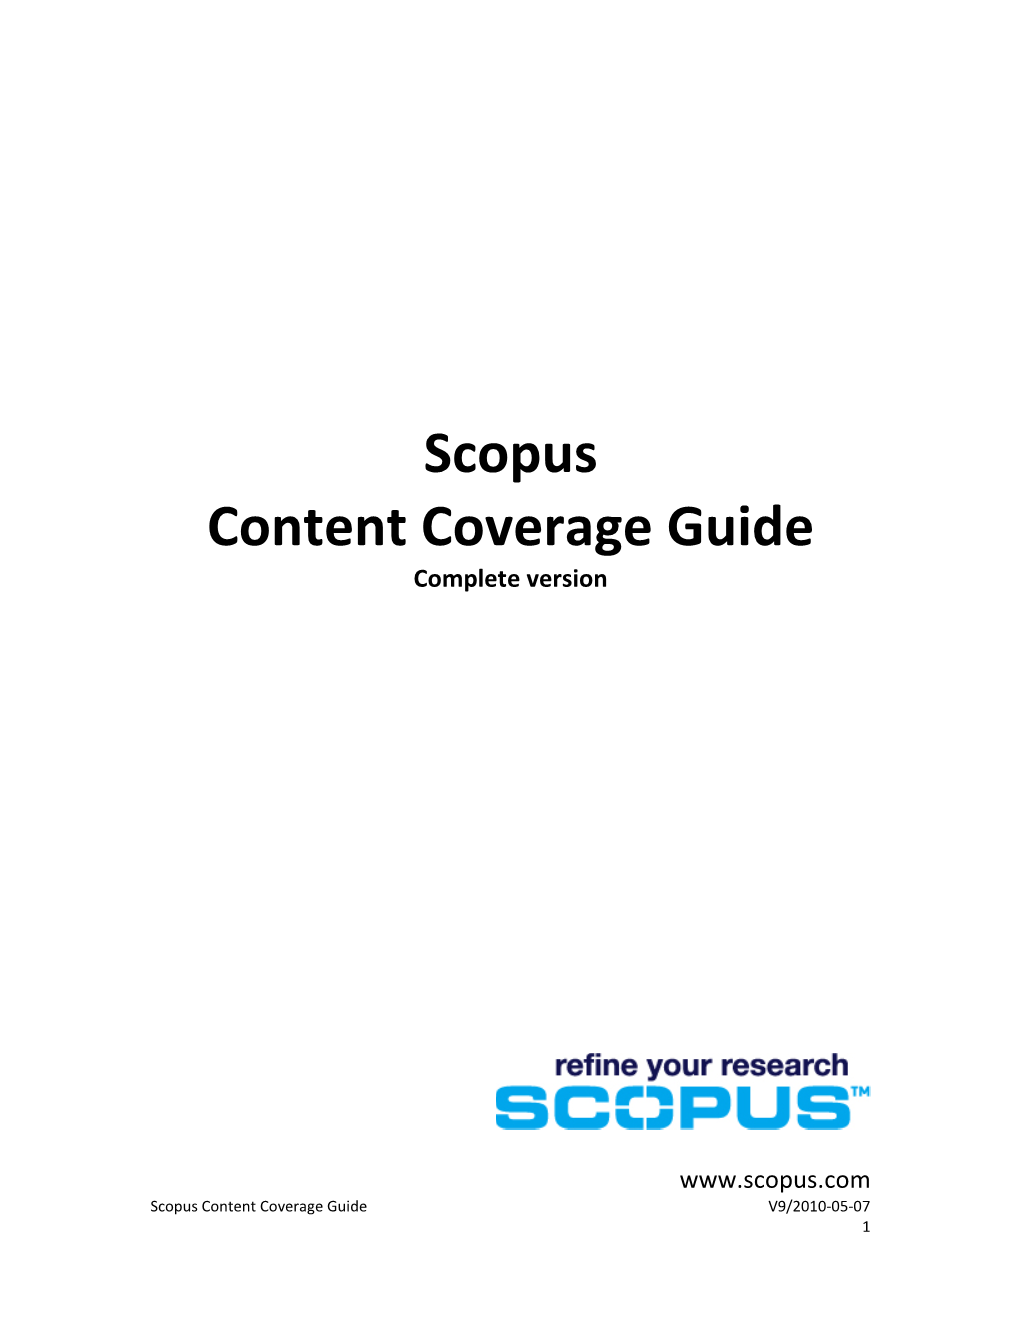 Scopus Content Coverage Guide Complete Version